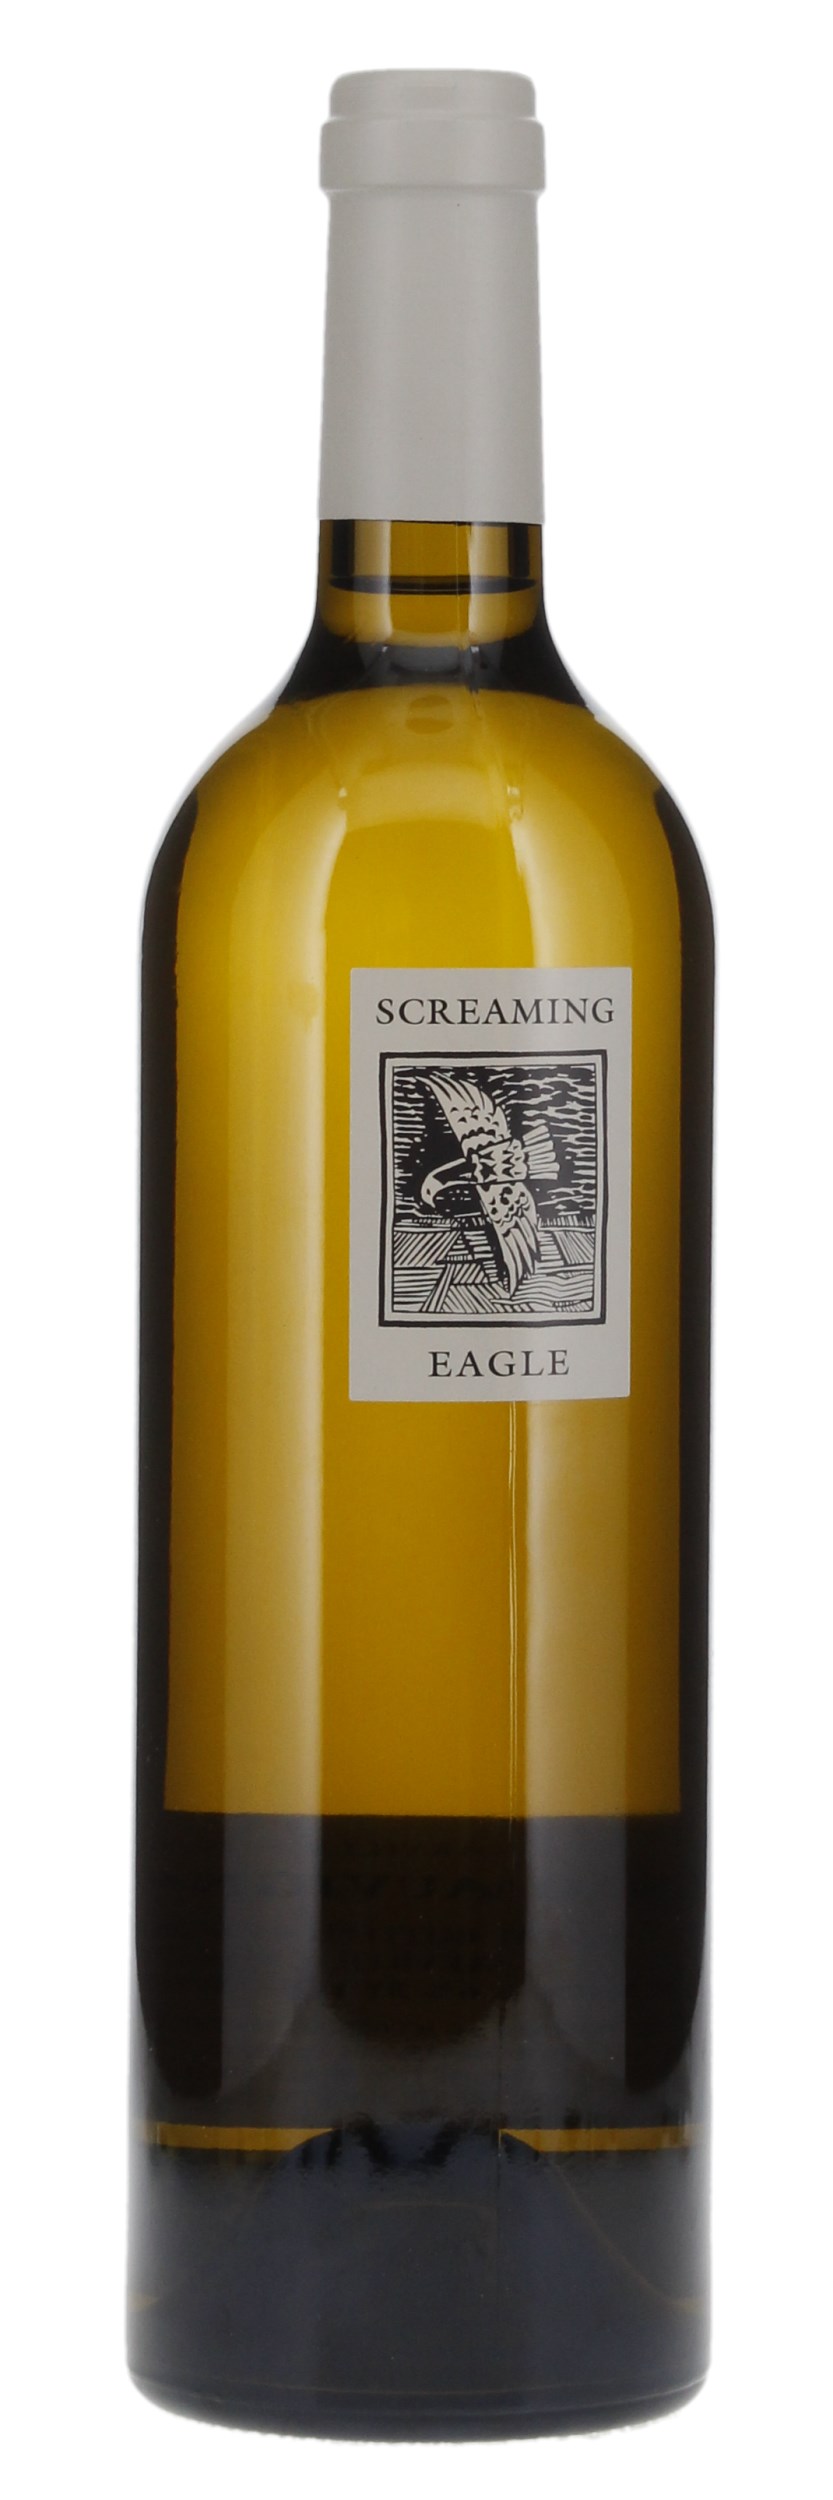 2010 Screaming Eagle Sauvignon Blanc, 750ml